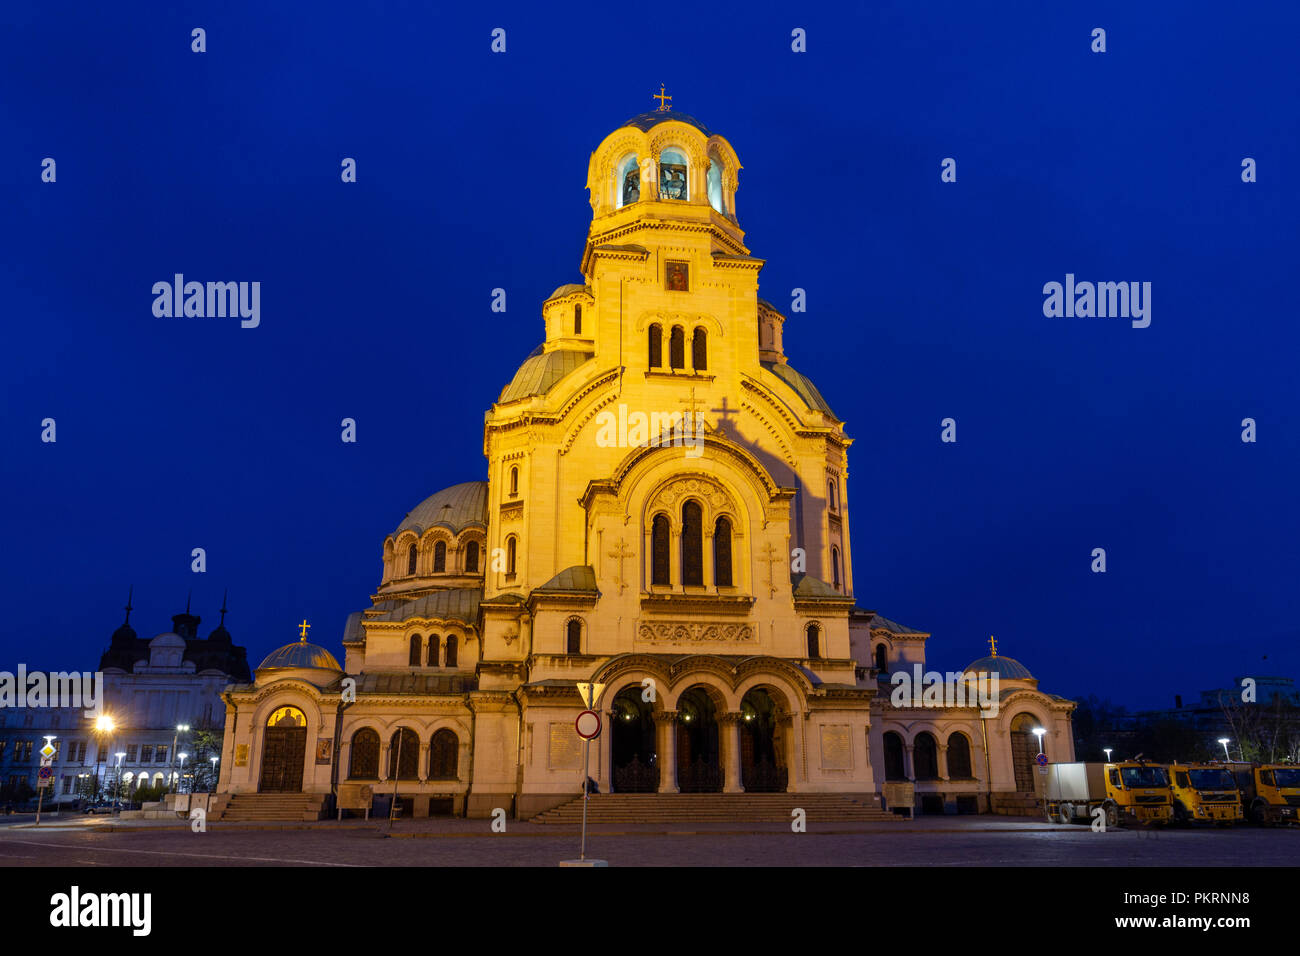 Die Alexander-Newski-Kathedrale in Sofia, Bulgarien. Stockfoto